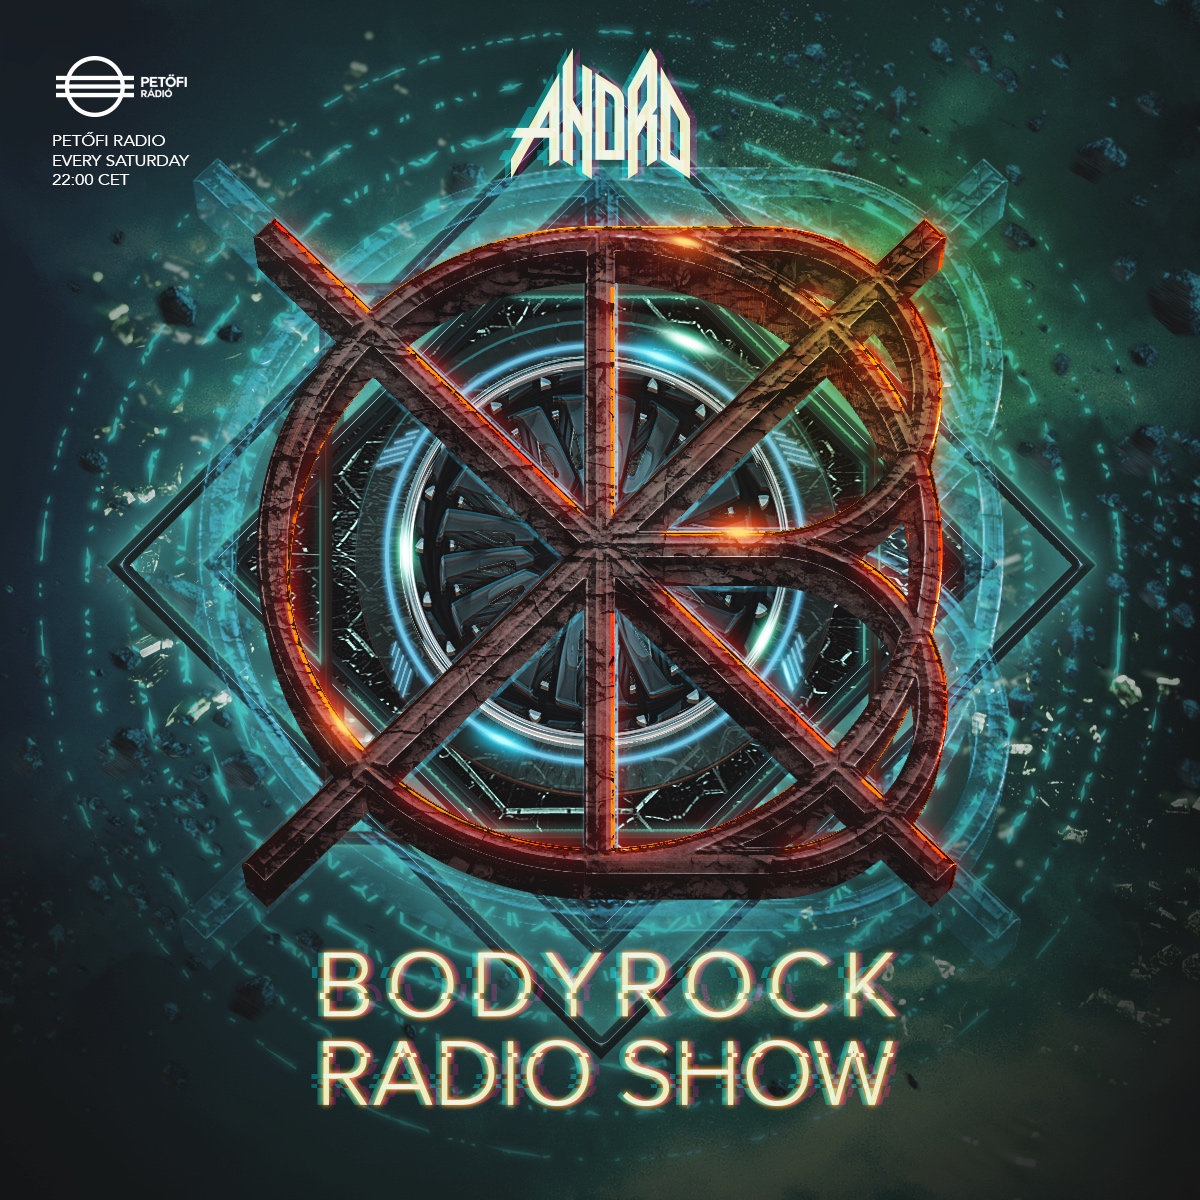 Bodyrock Radio Show 31 (2016)